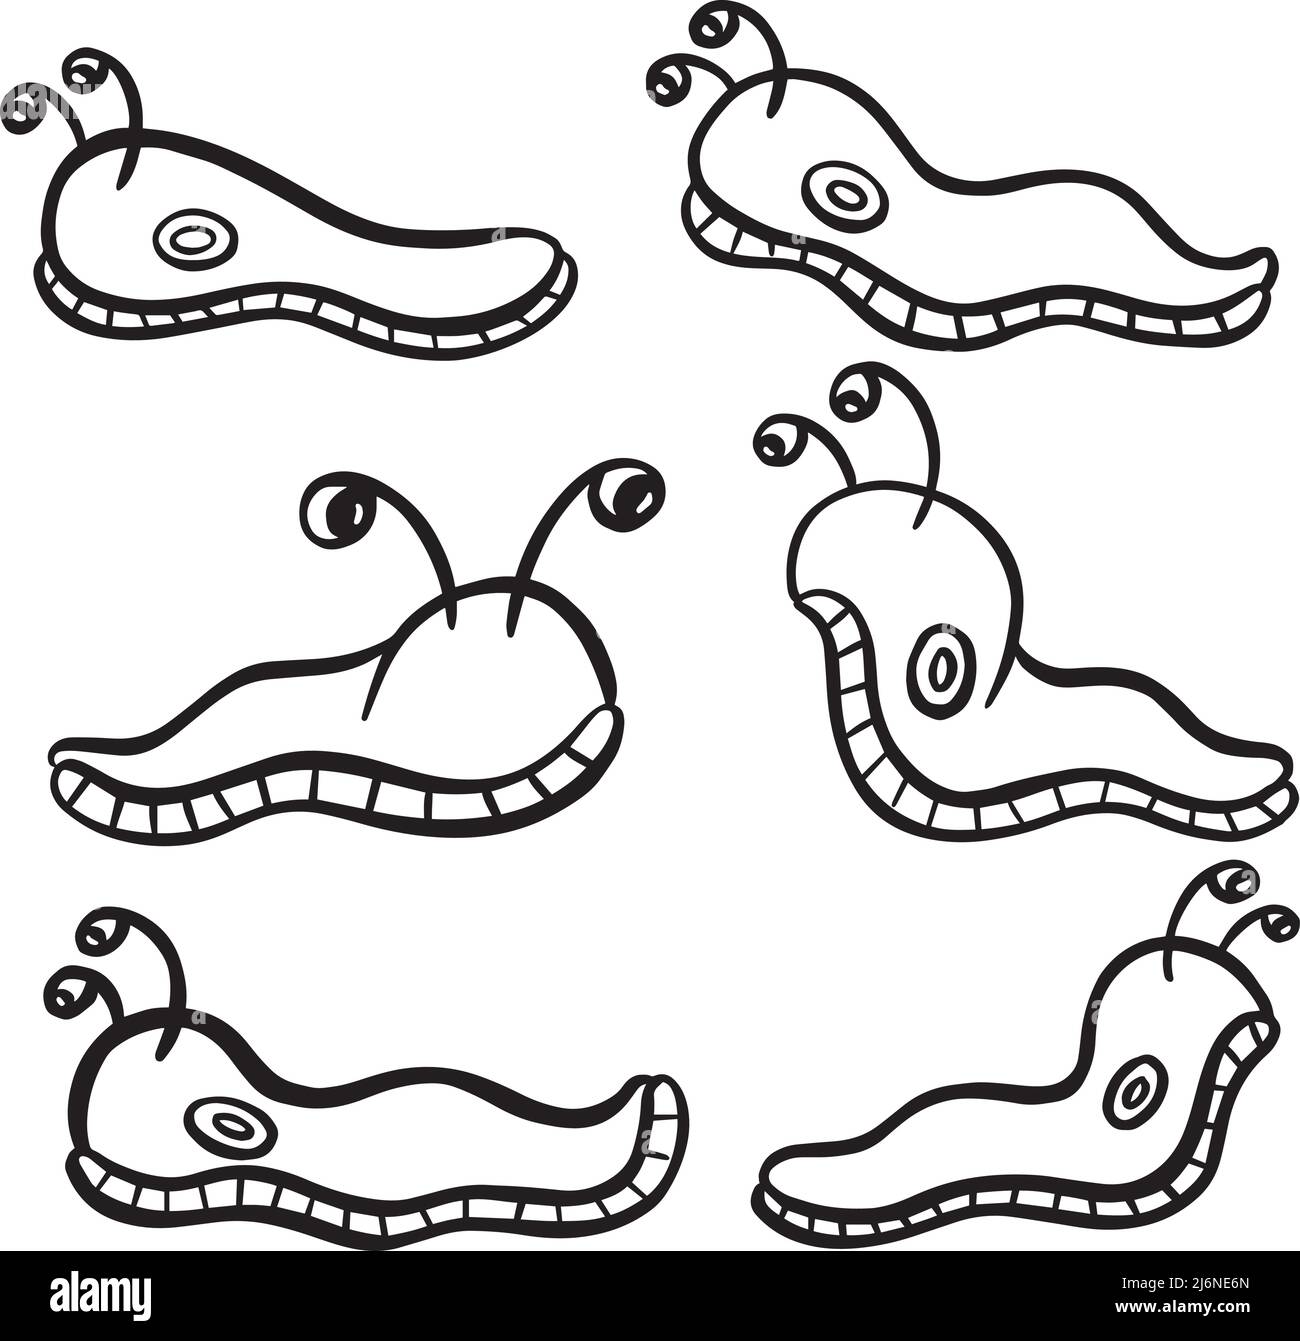 Cartoon Funny Slugs Collection Illustration in Vector Stock Vector